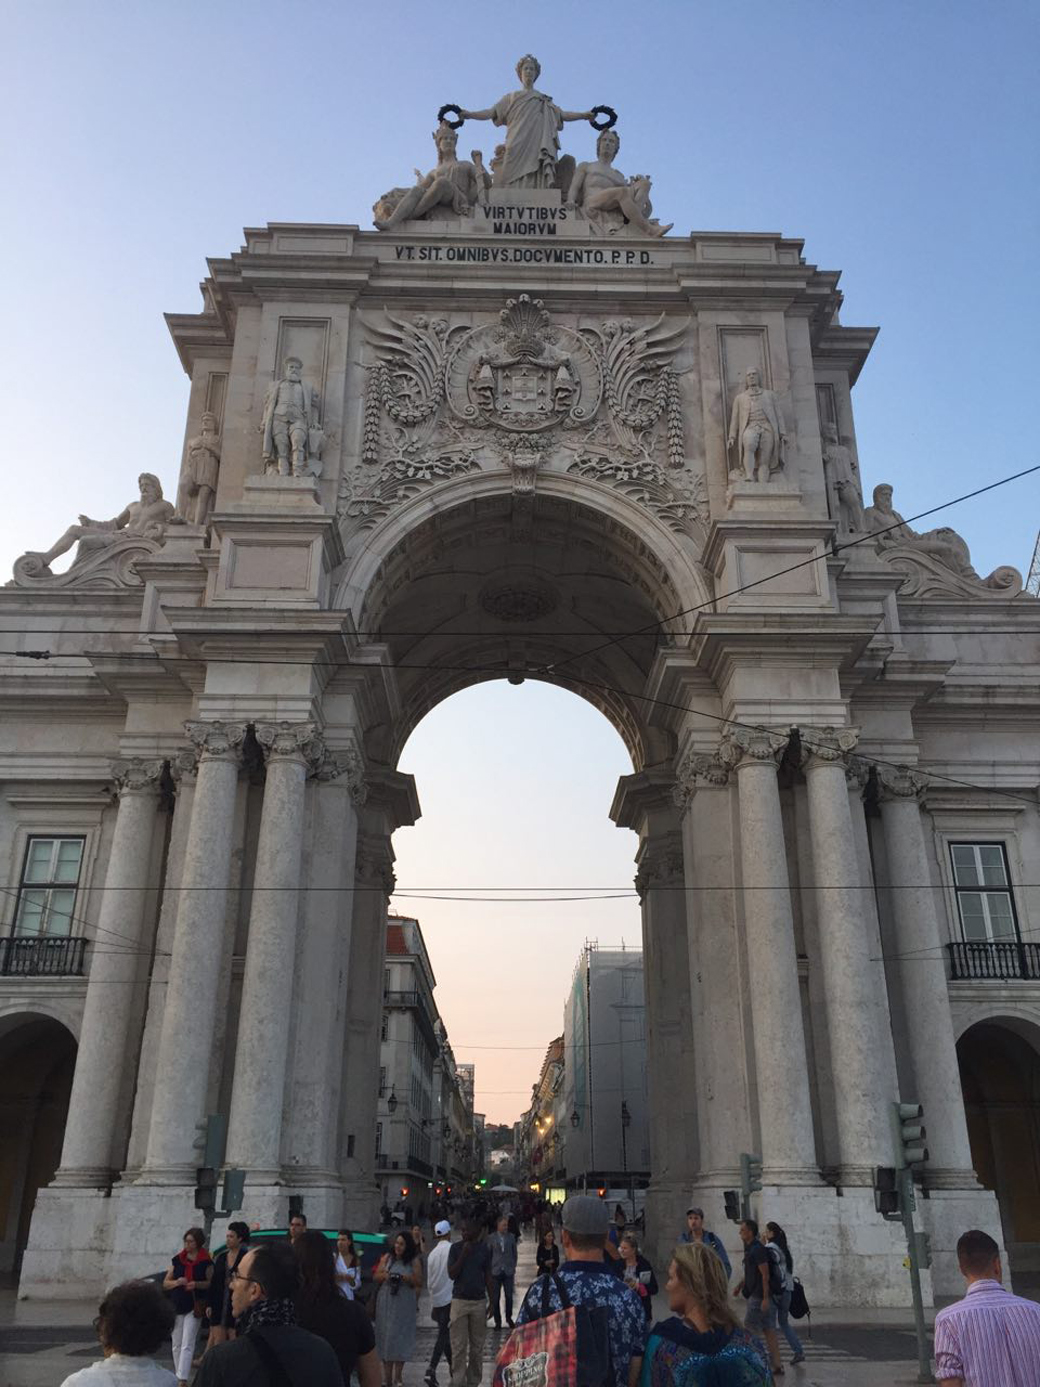 The triumphal arch in Lisbon